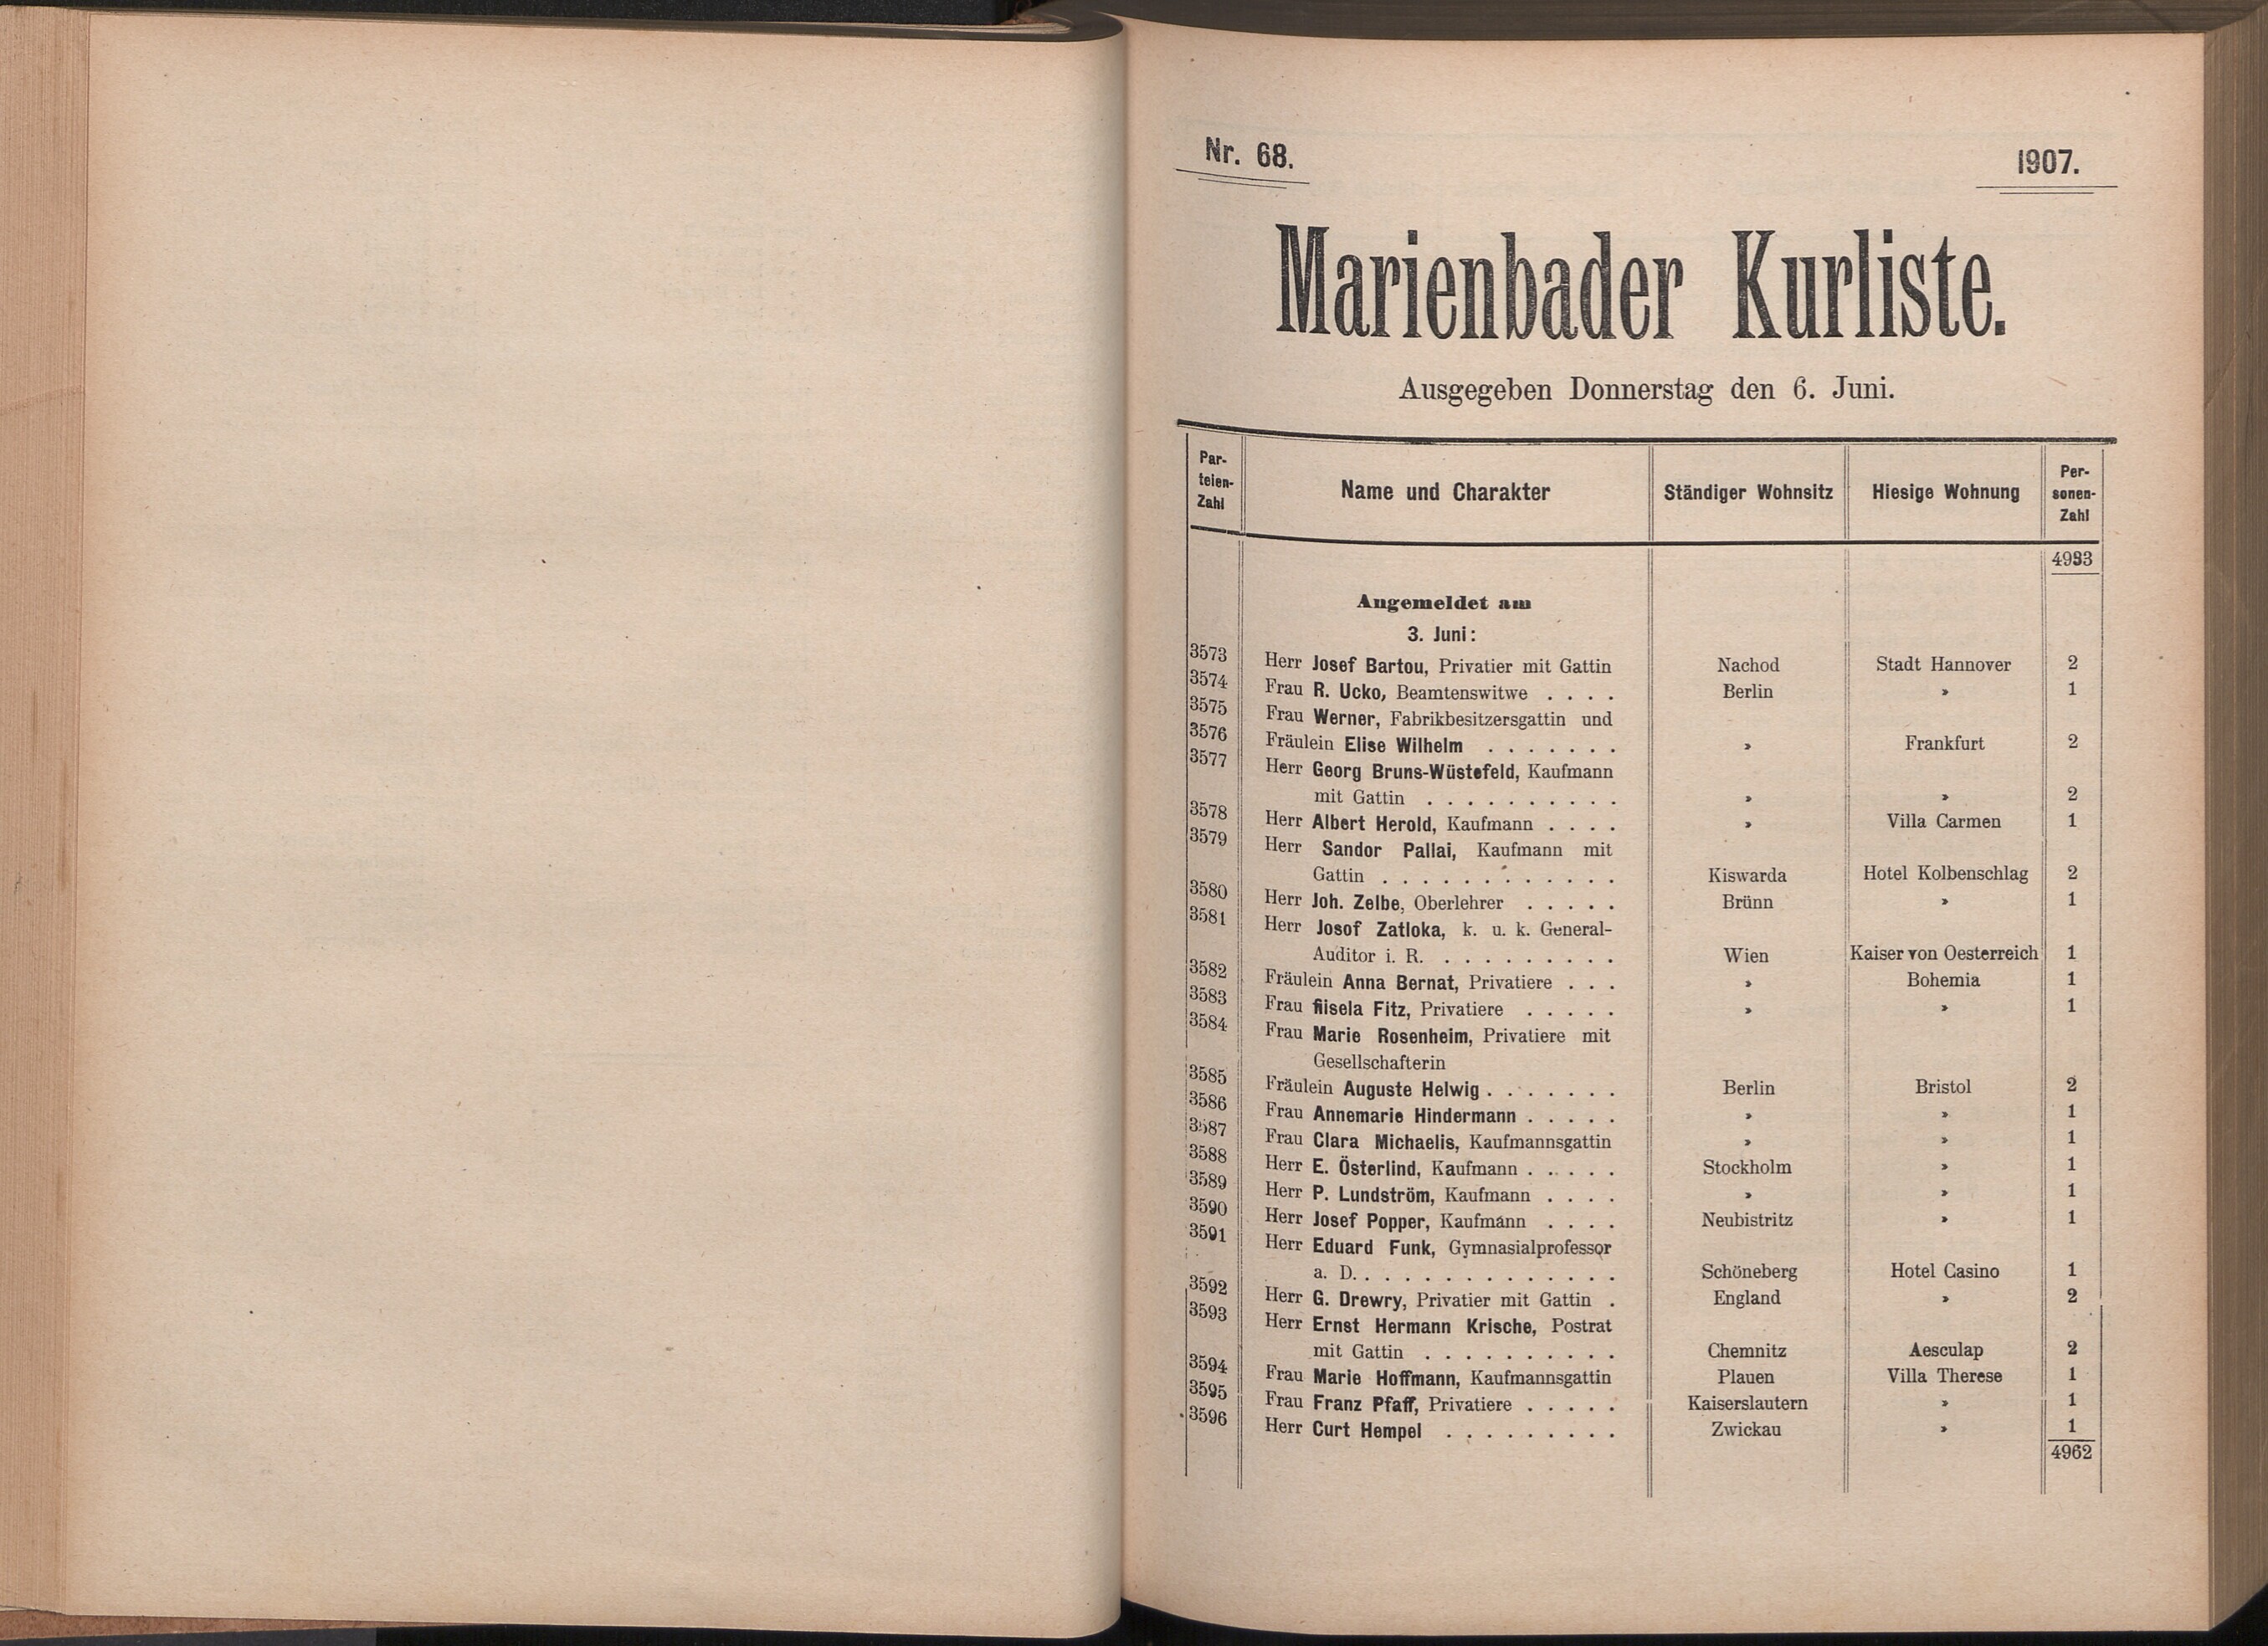 84. soap-ch_knihovna_marienbader-kurliste-1907_0840